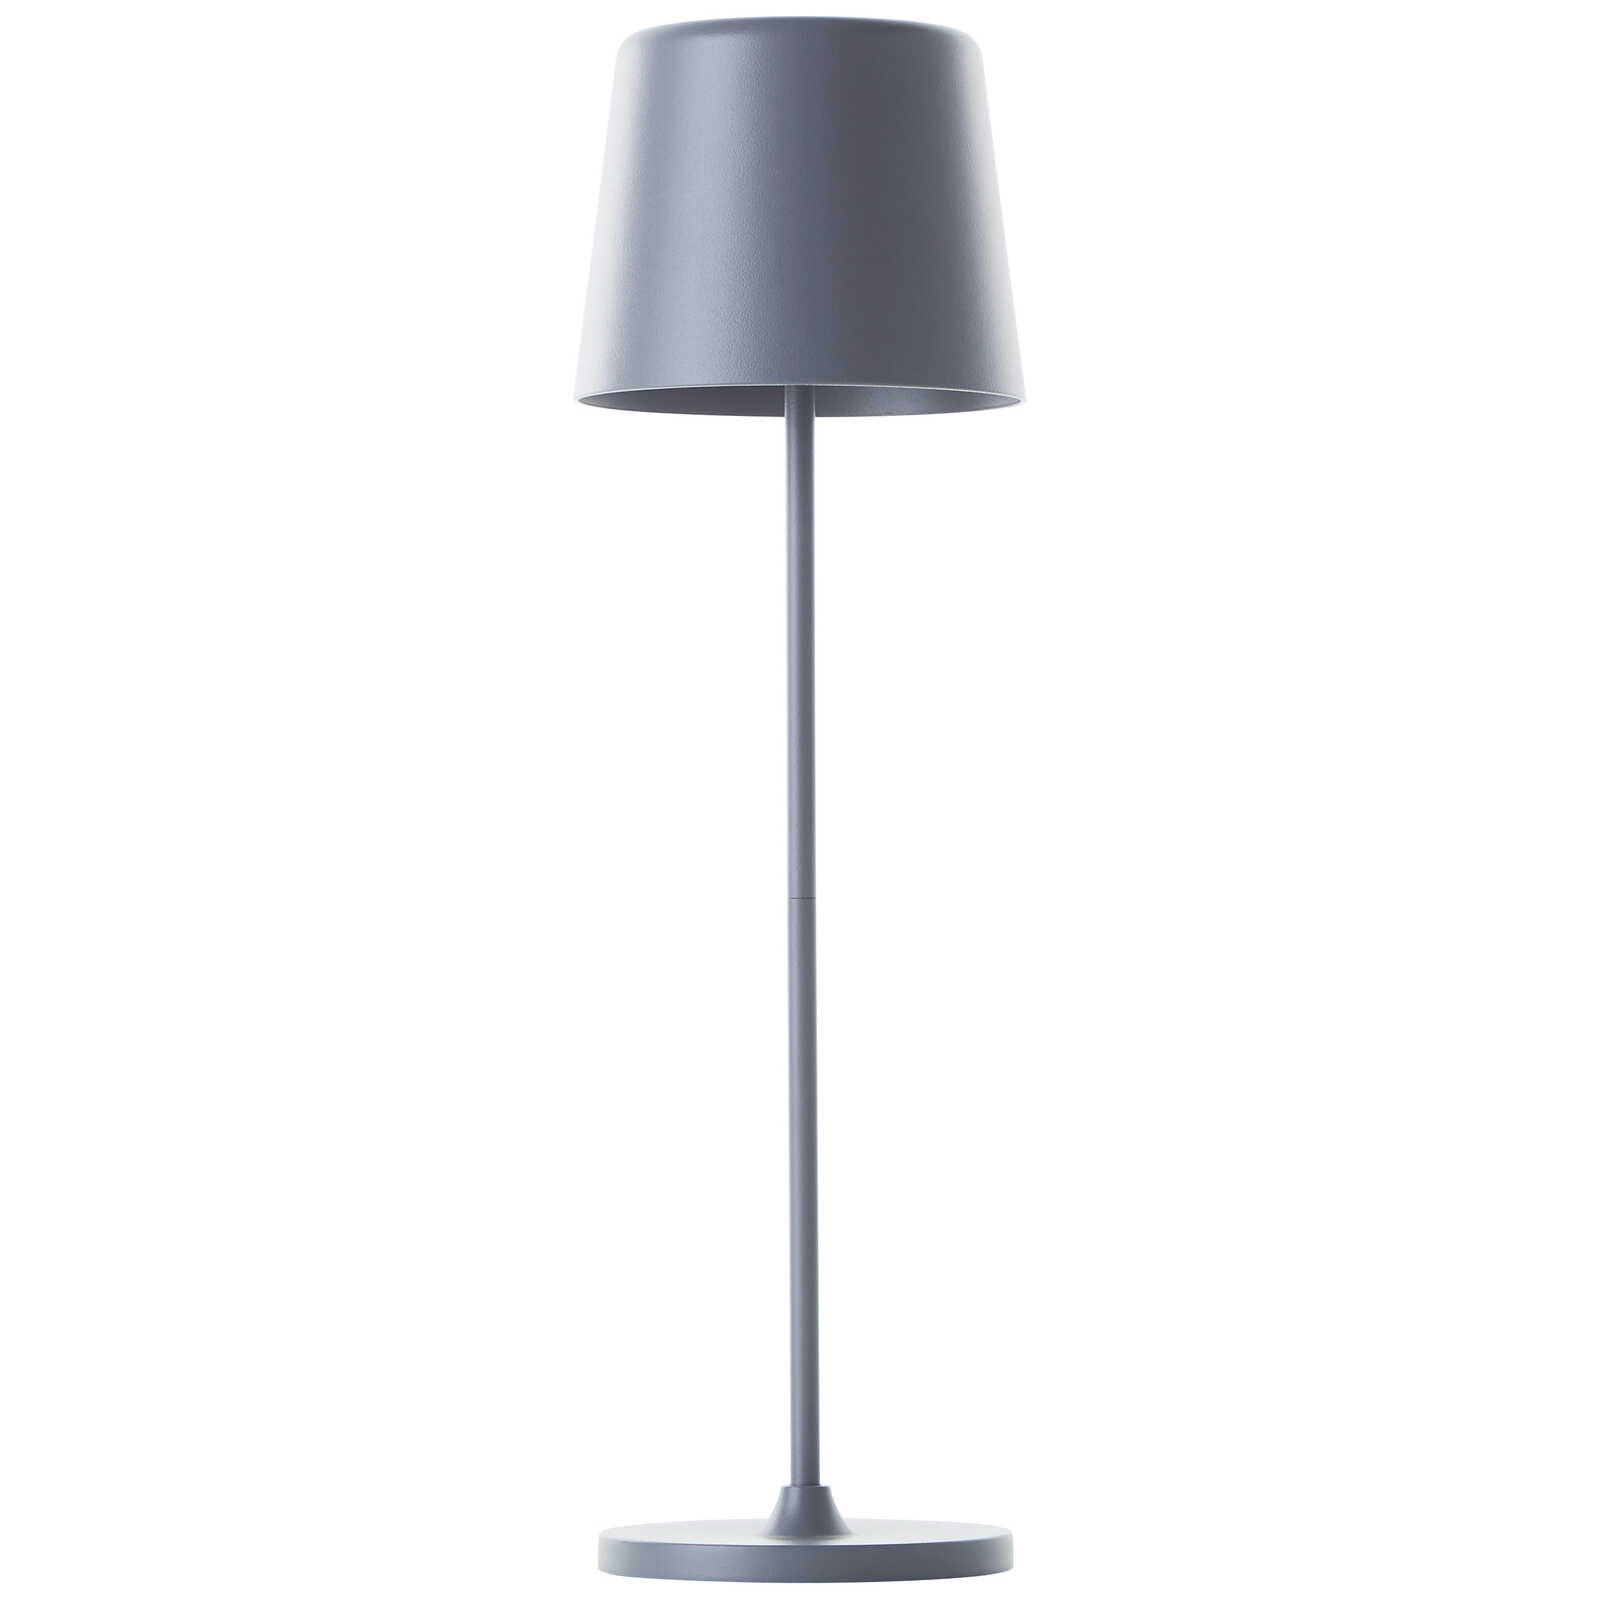             Metal table lamp - Cosy 4 - Grey
        